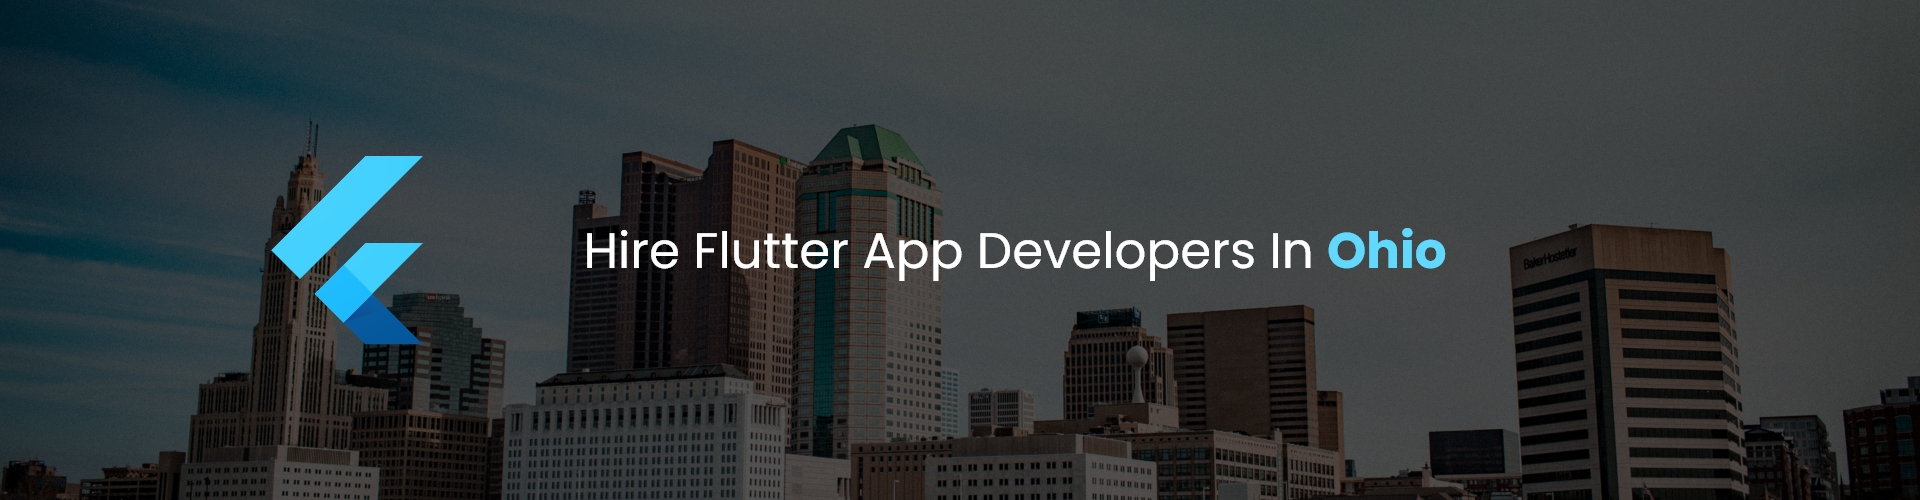 hire flutter app developers in ohio